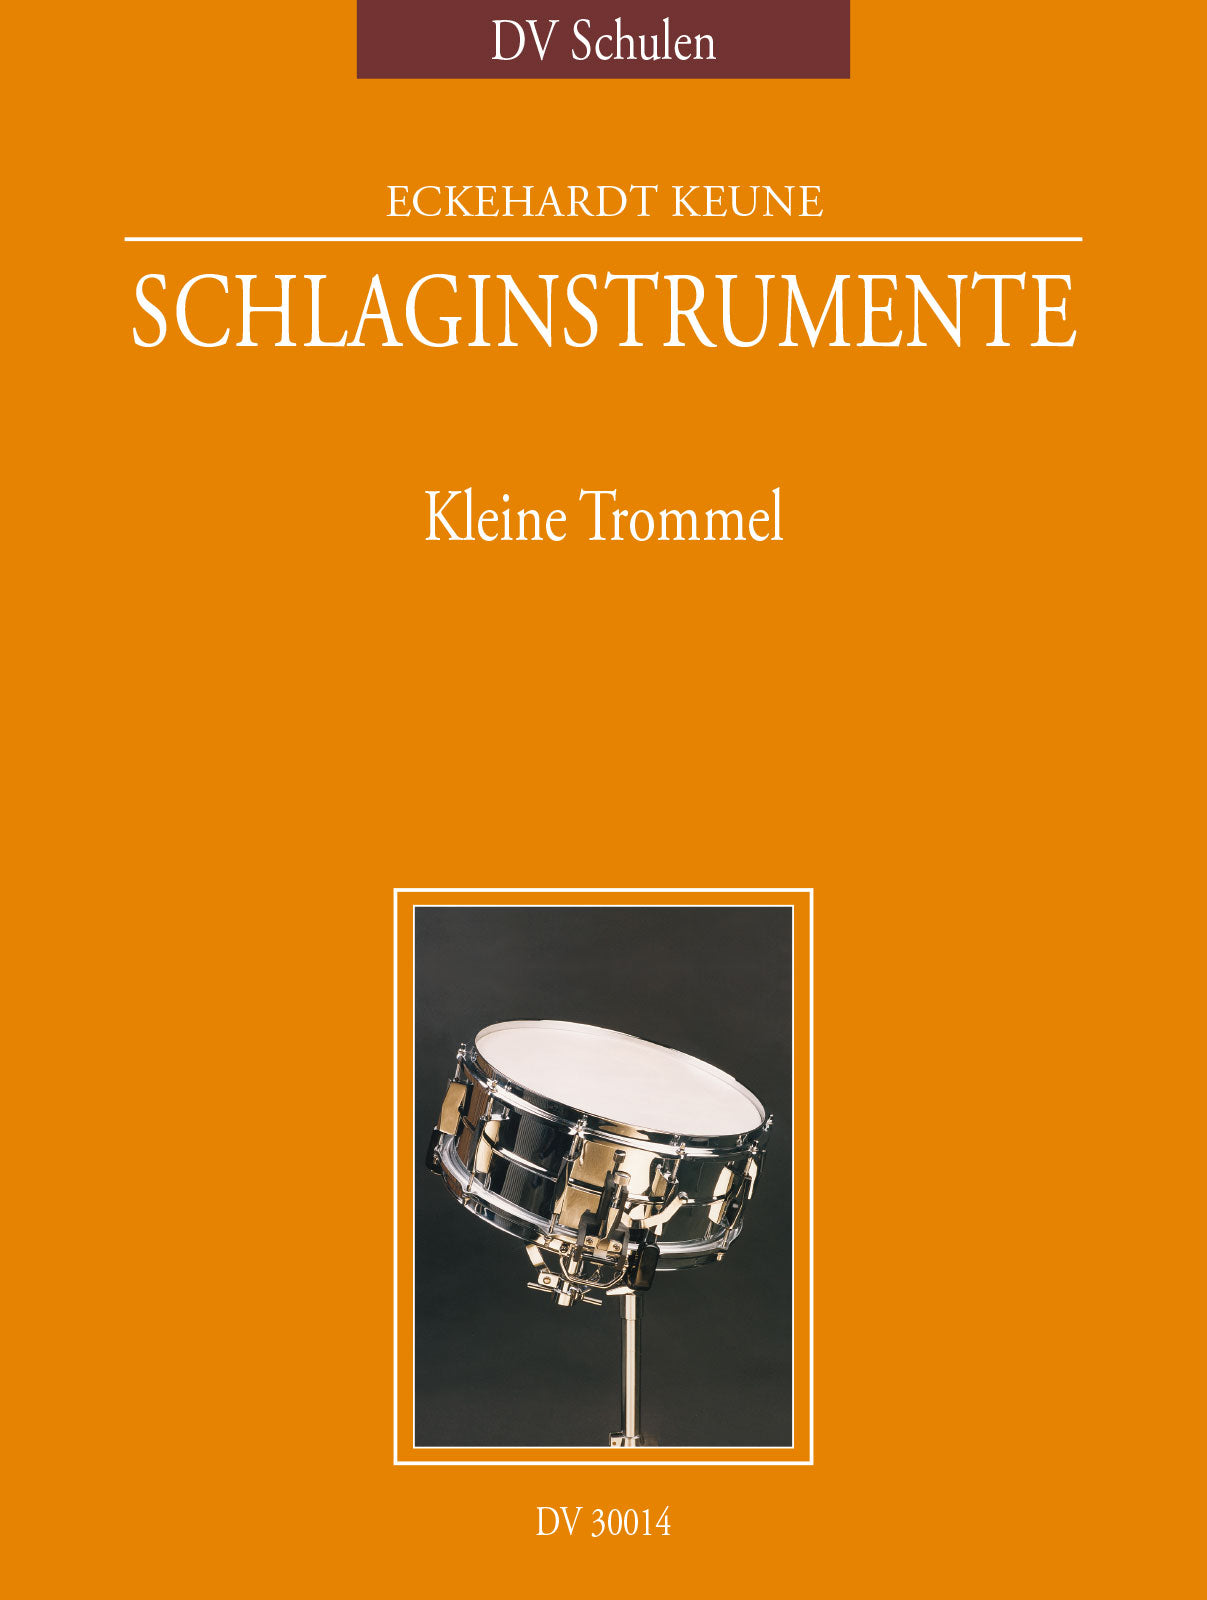 Keune: Percussion Instruments